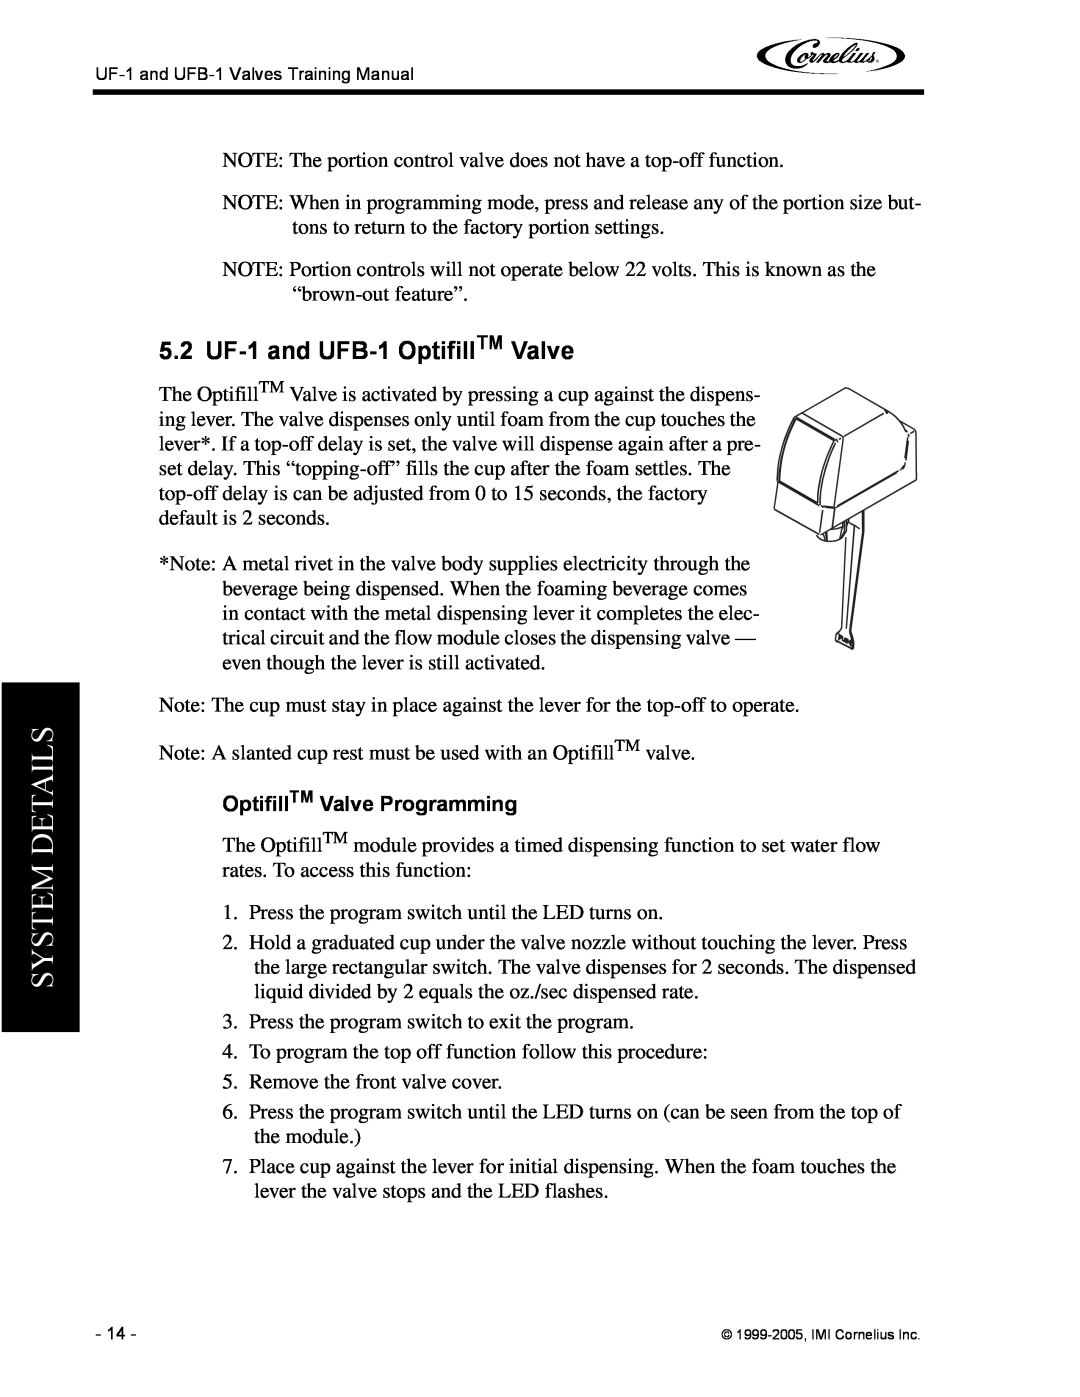 Cornelius manual 5.2 UF-1and UFB-1OptifillTM Valve, OptifillTM Valve Programming, System Details 